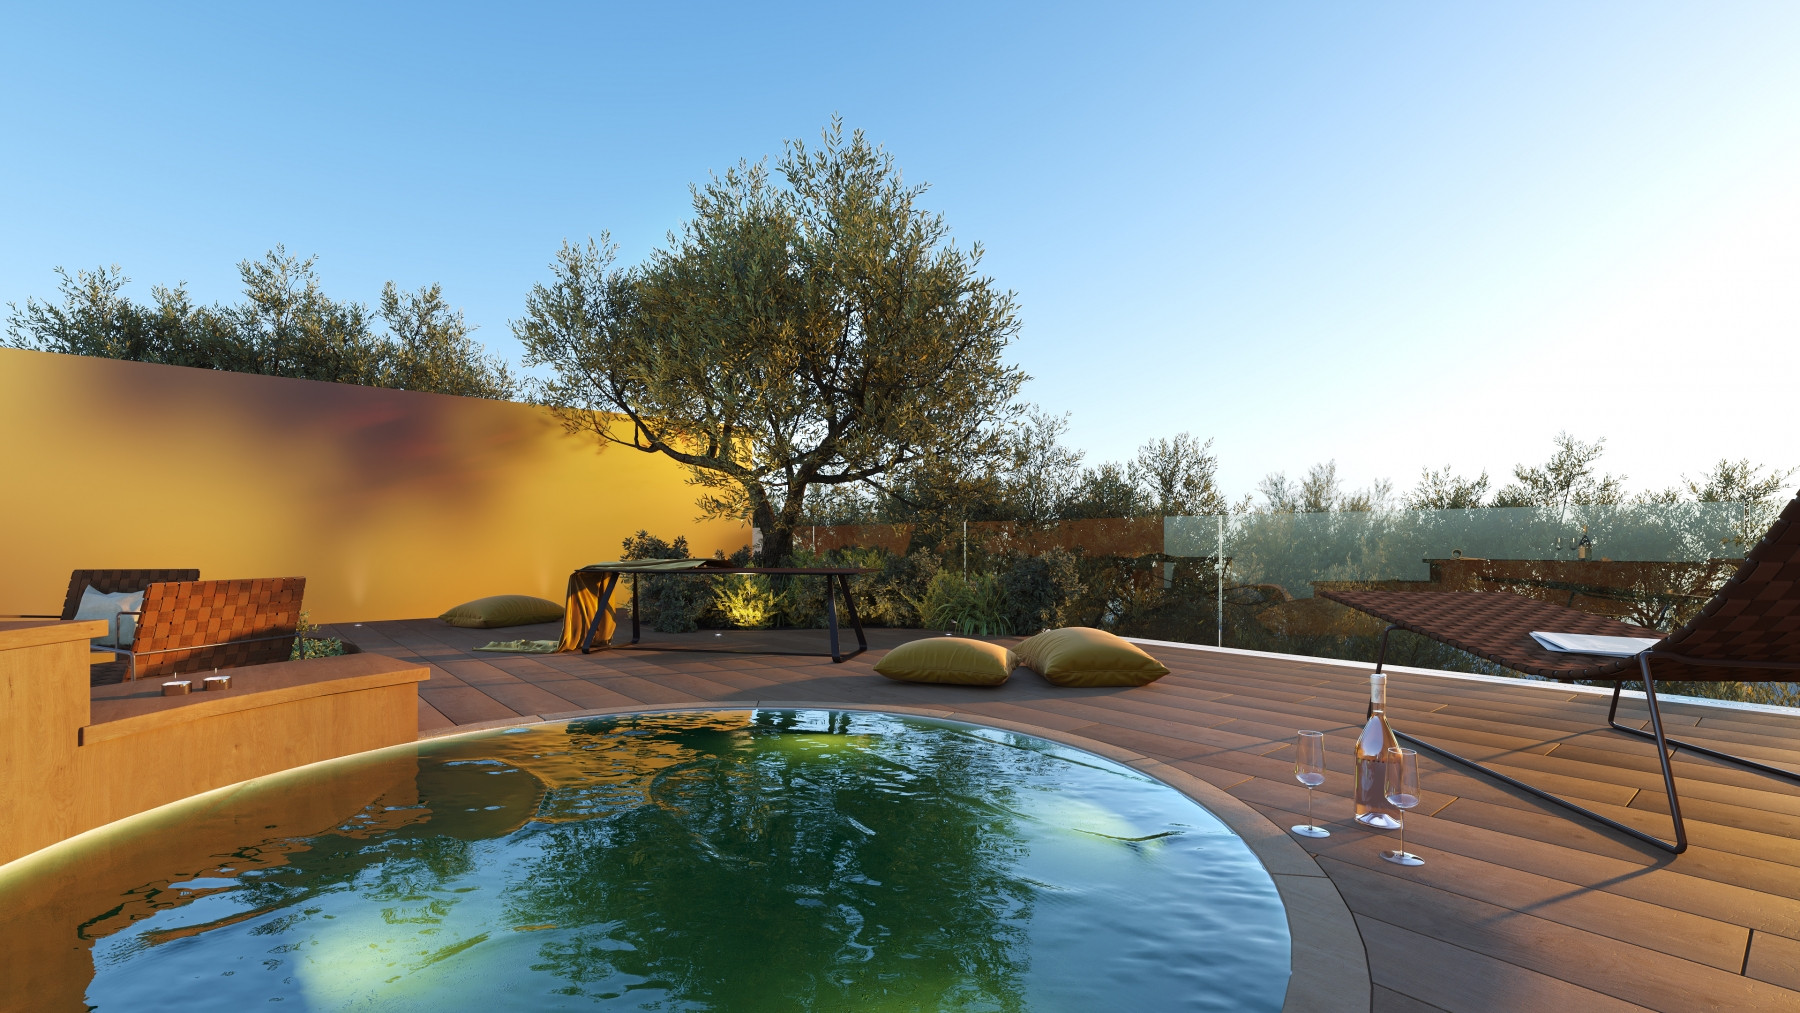 Luxury three bedroom villa with solarium and swimming pool situated in El Higueron, Fuengirola. | Image 5